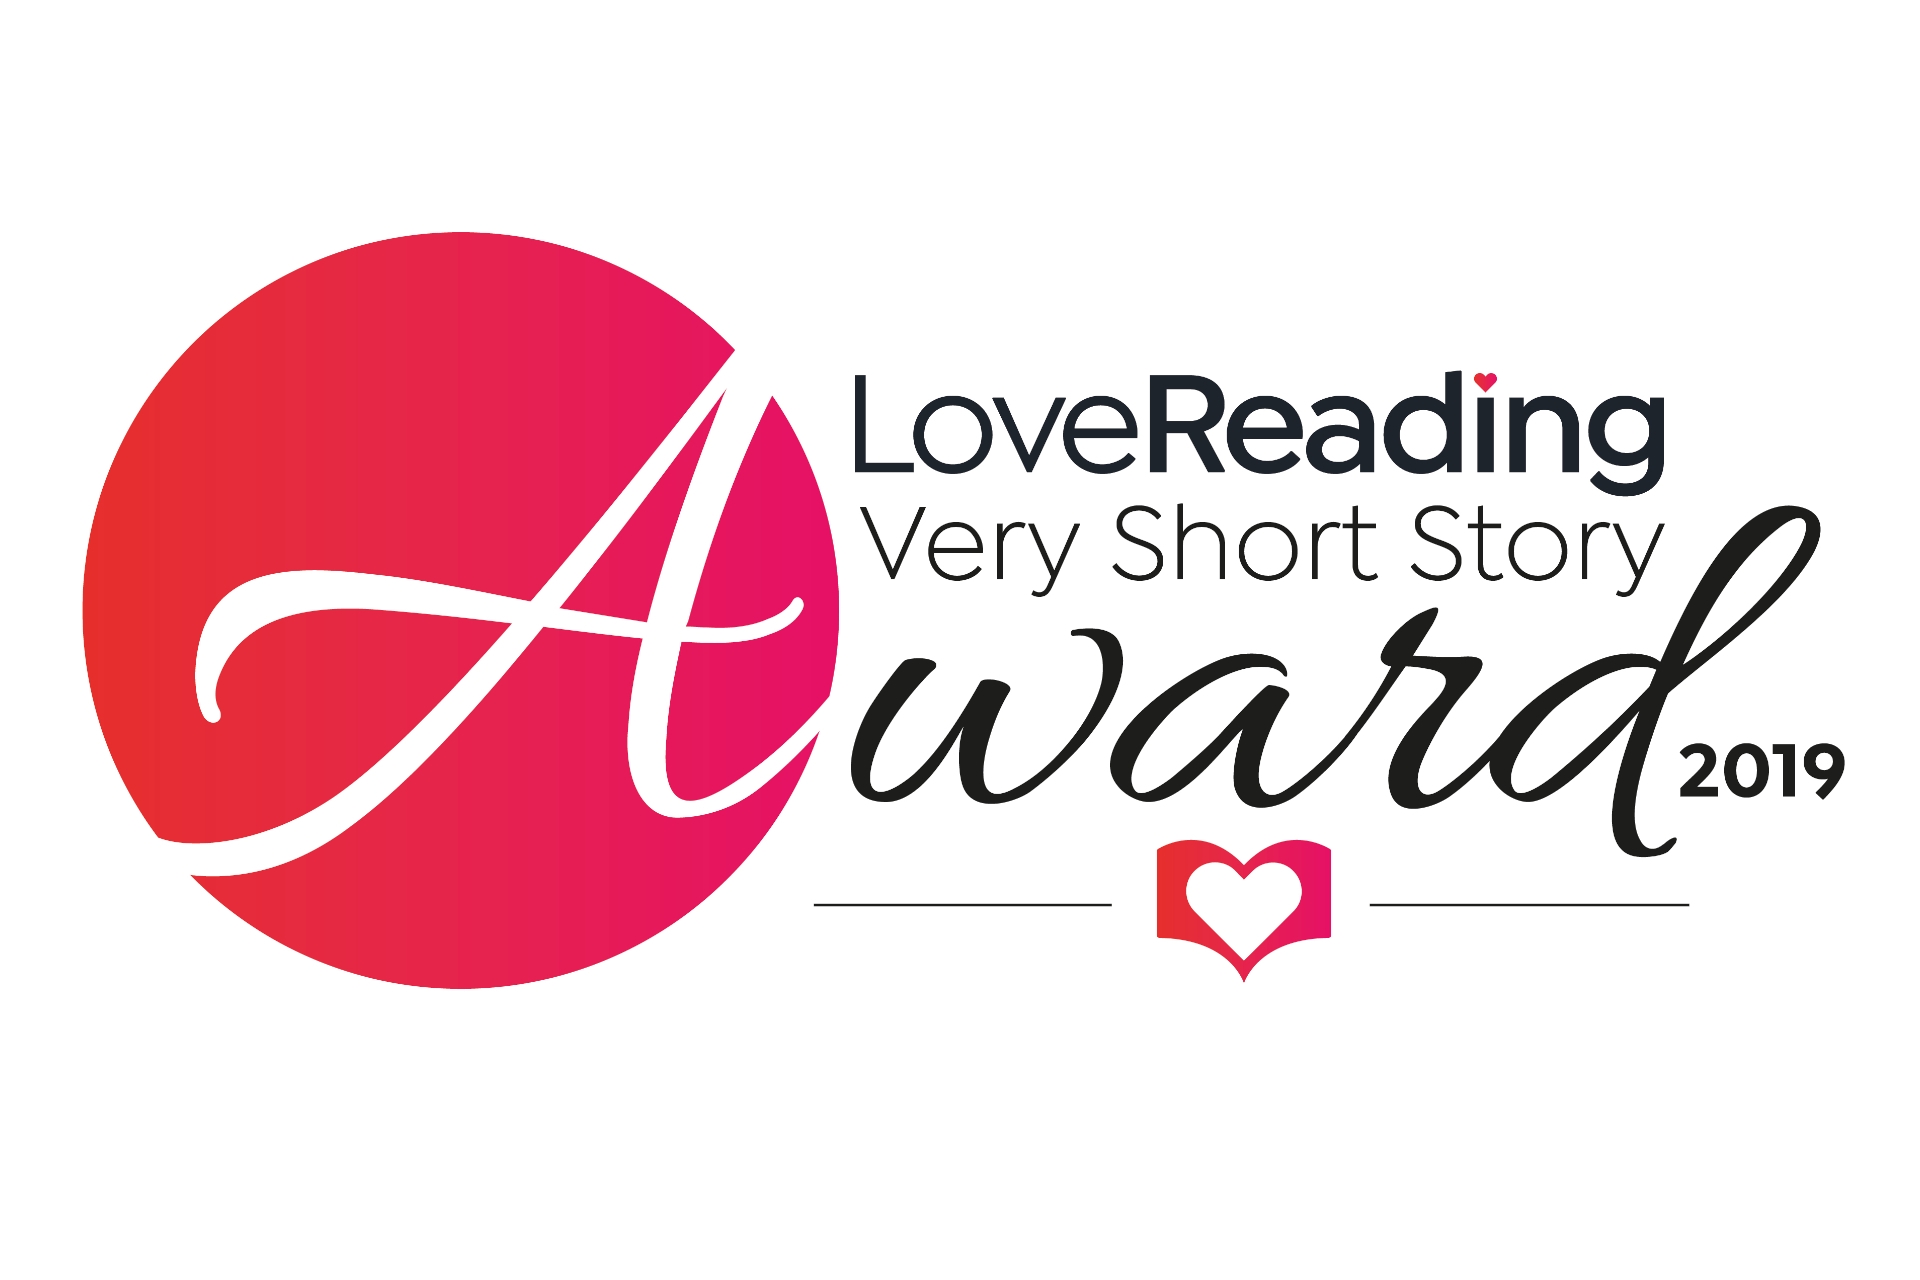 The LoveReading Very Short Story Award Shortlist Announced!